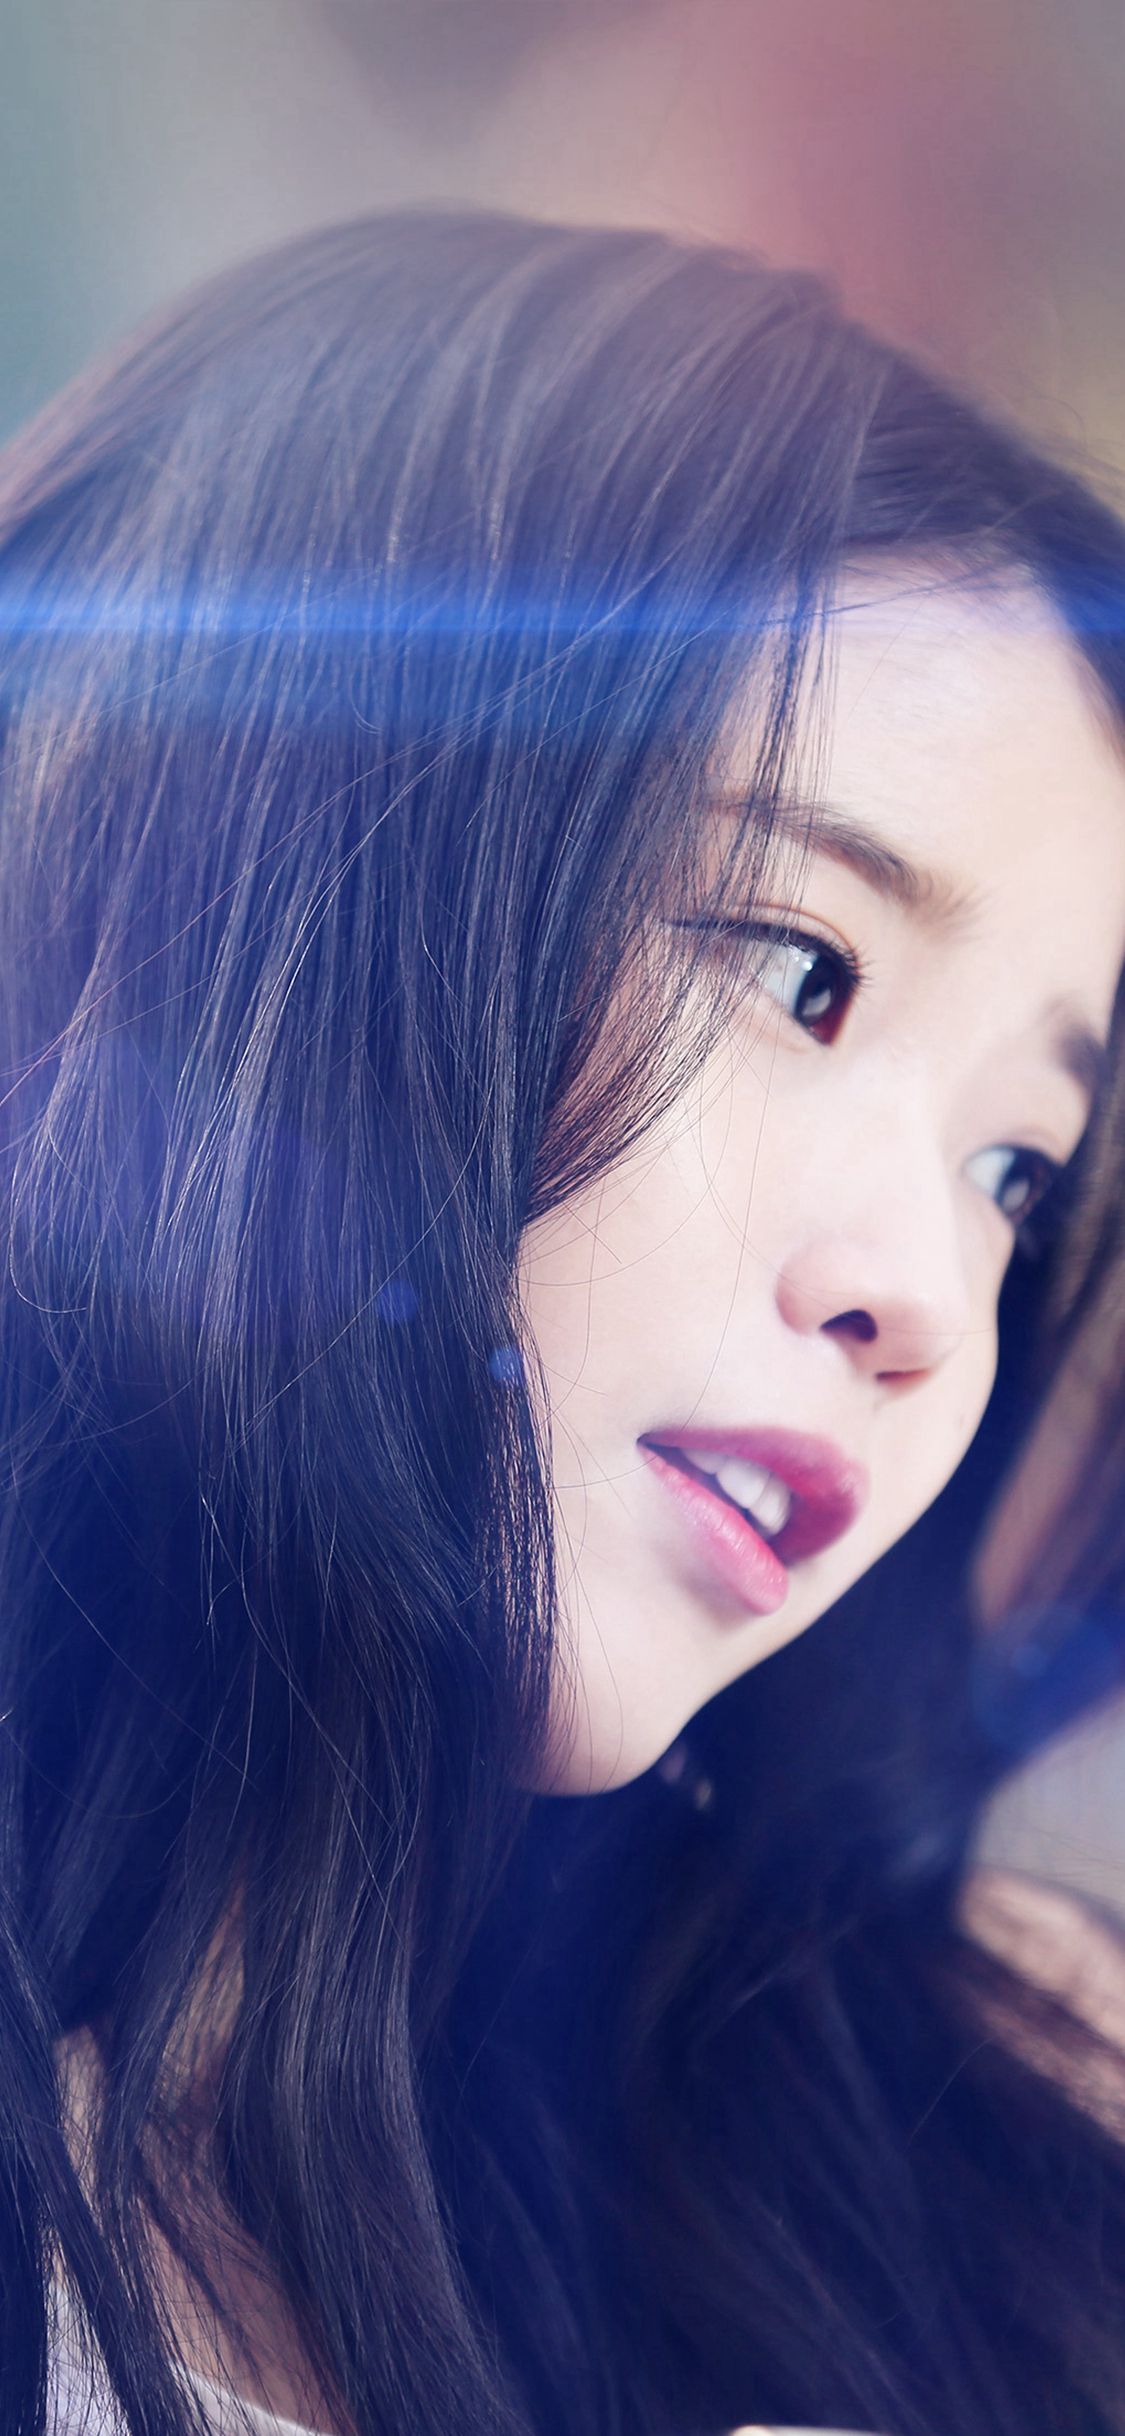 IU Kpop Beauty Girl Singer Blue Flare iPhone X Wallpaper Free